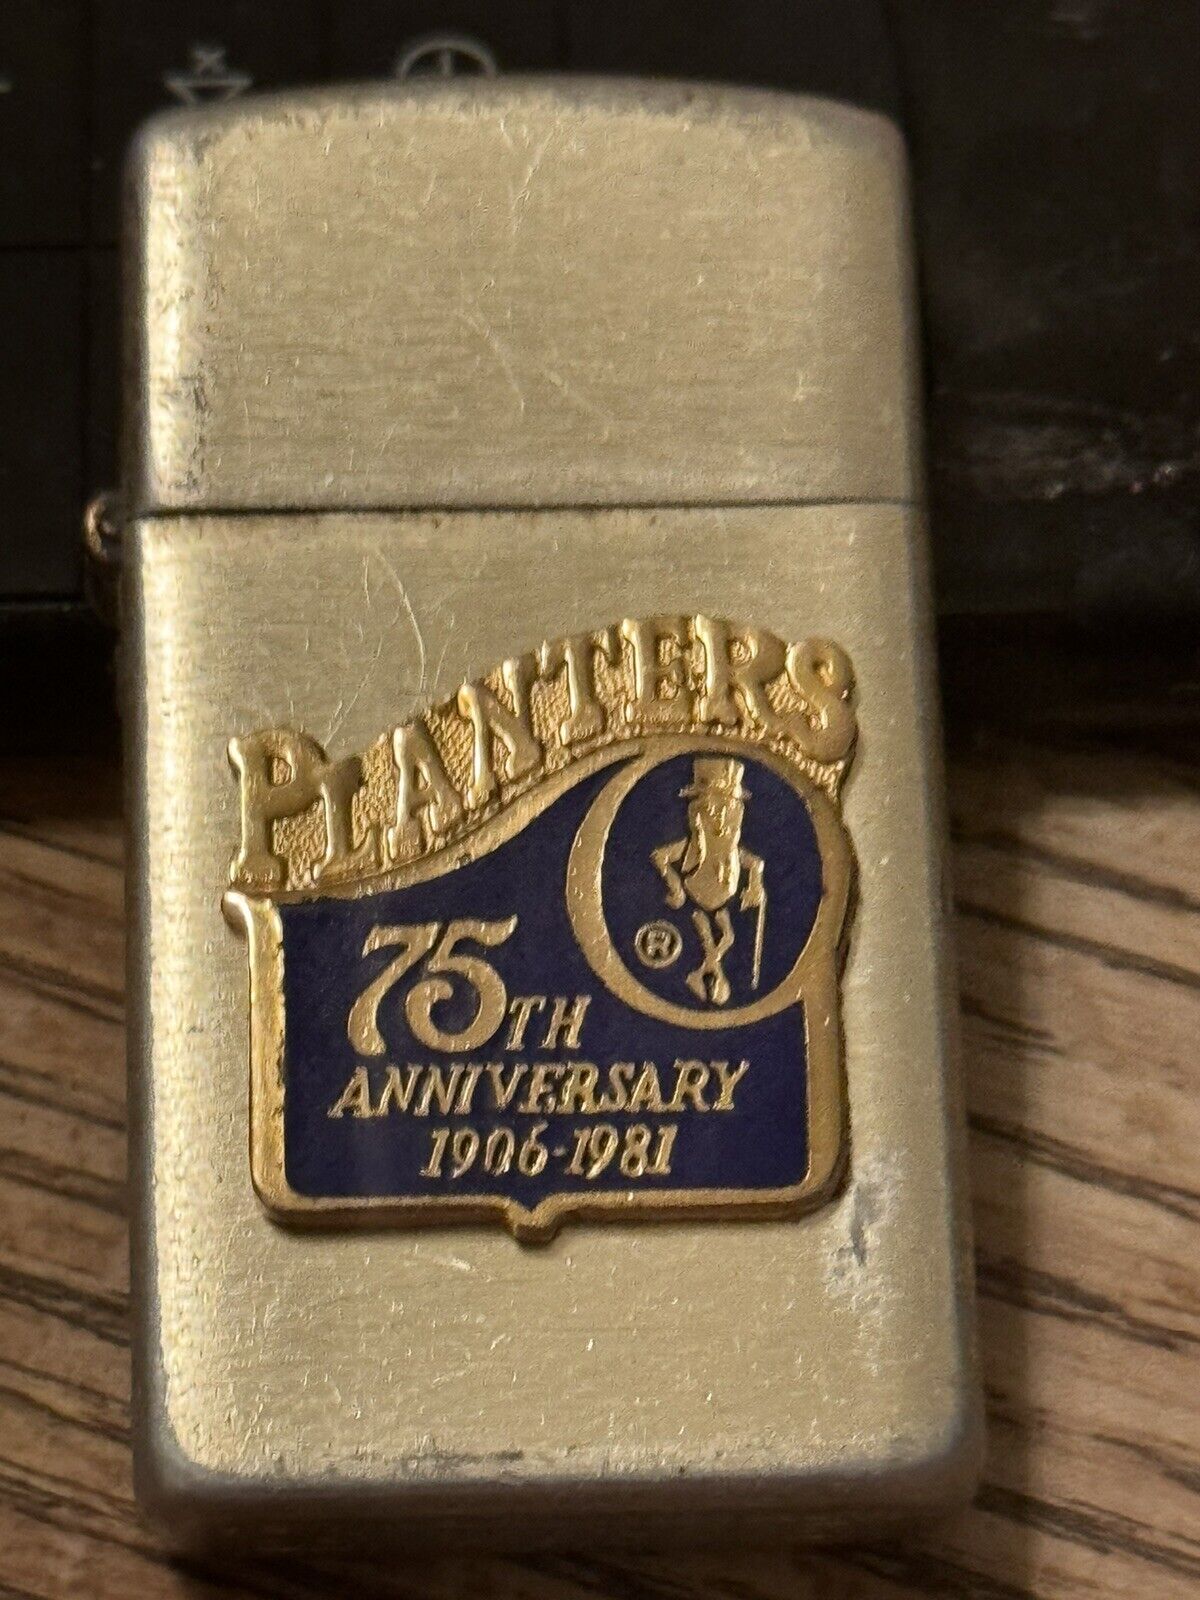 Lighter Planters Peanuts 75th Anniversary